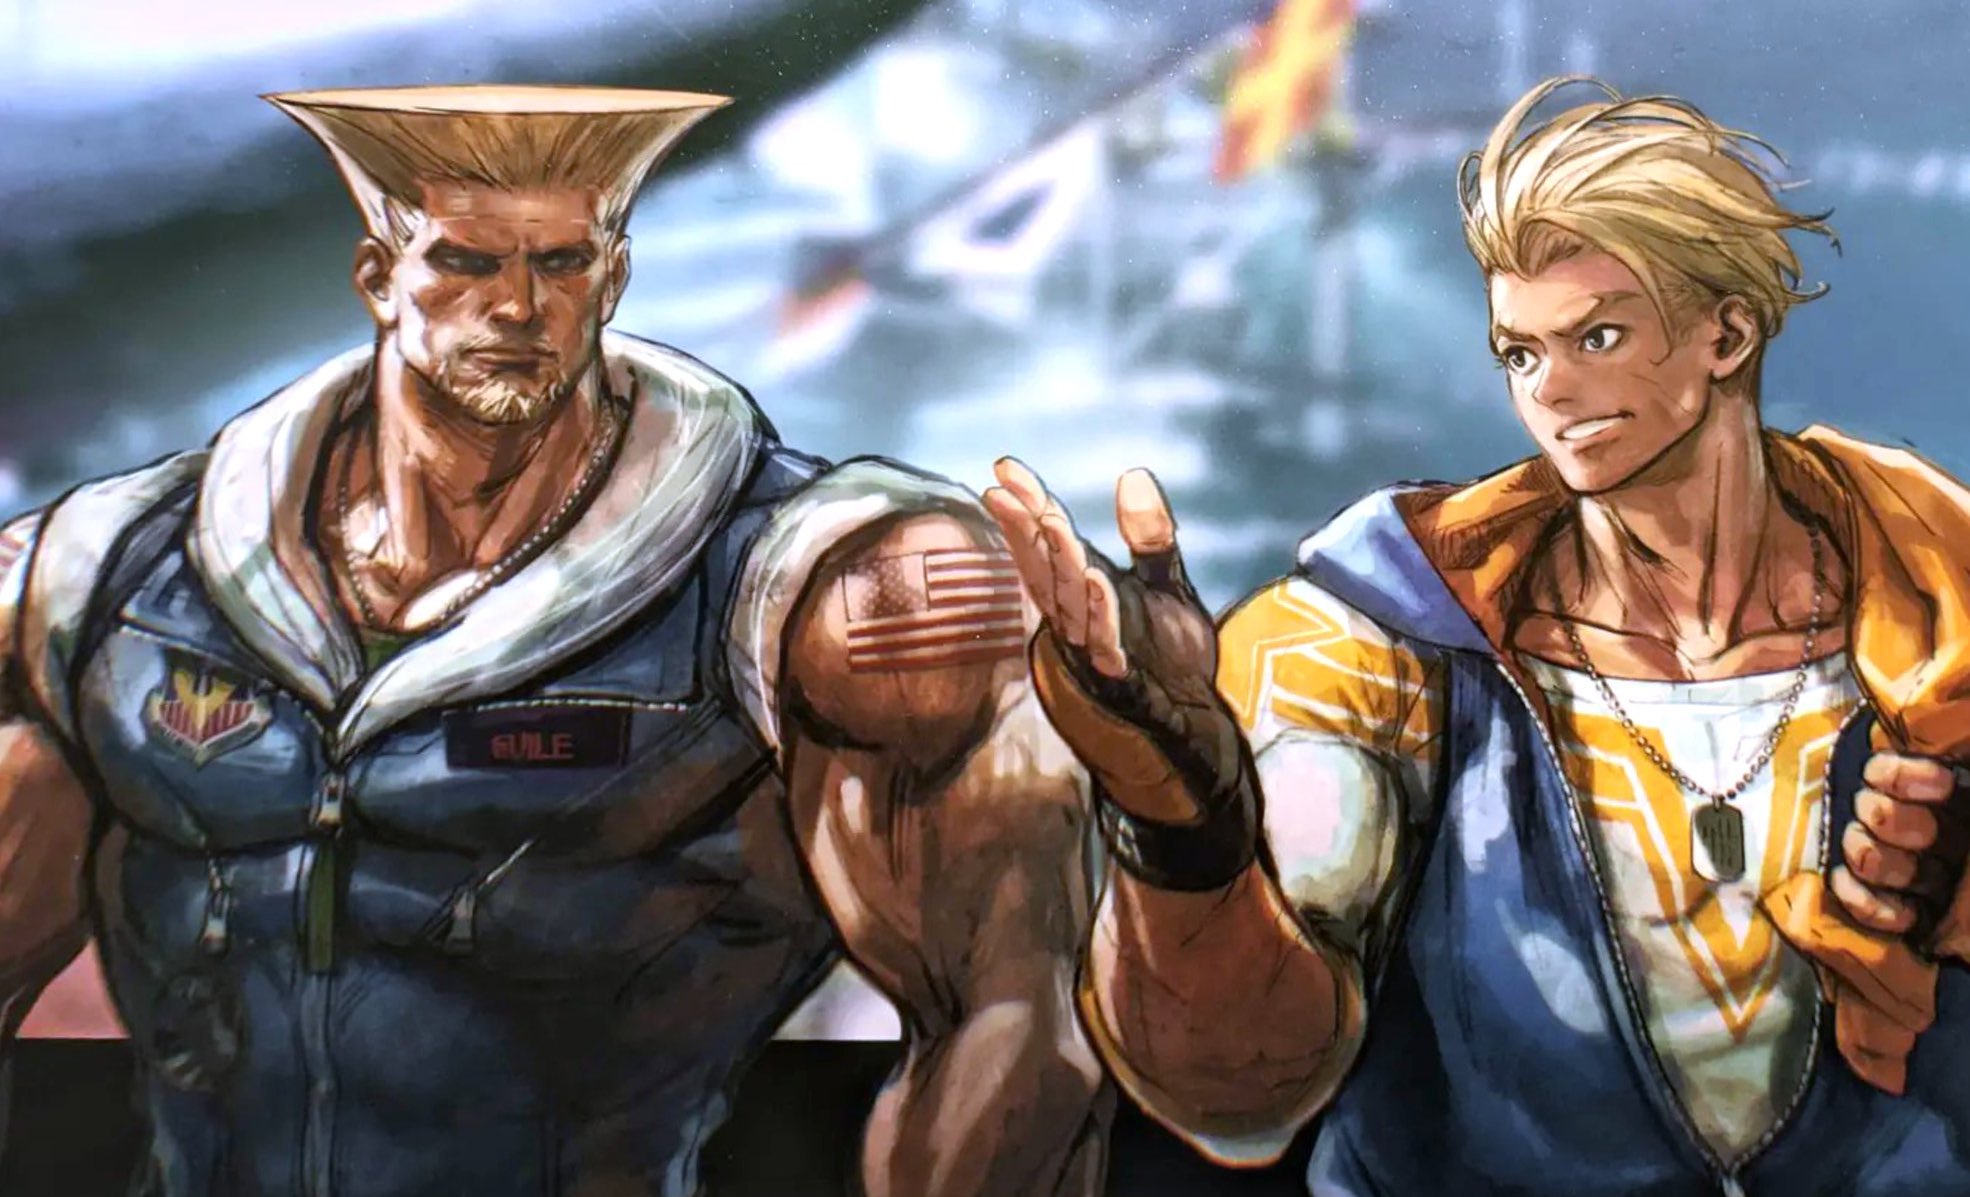 Street Fighter 6 Art Director Breaks Down Each Revealed Character